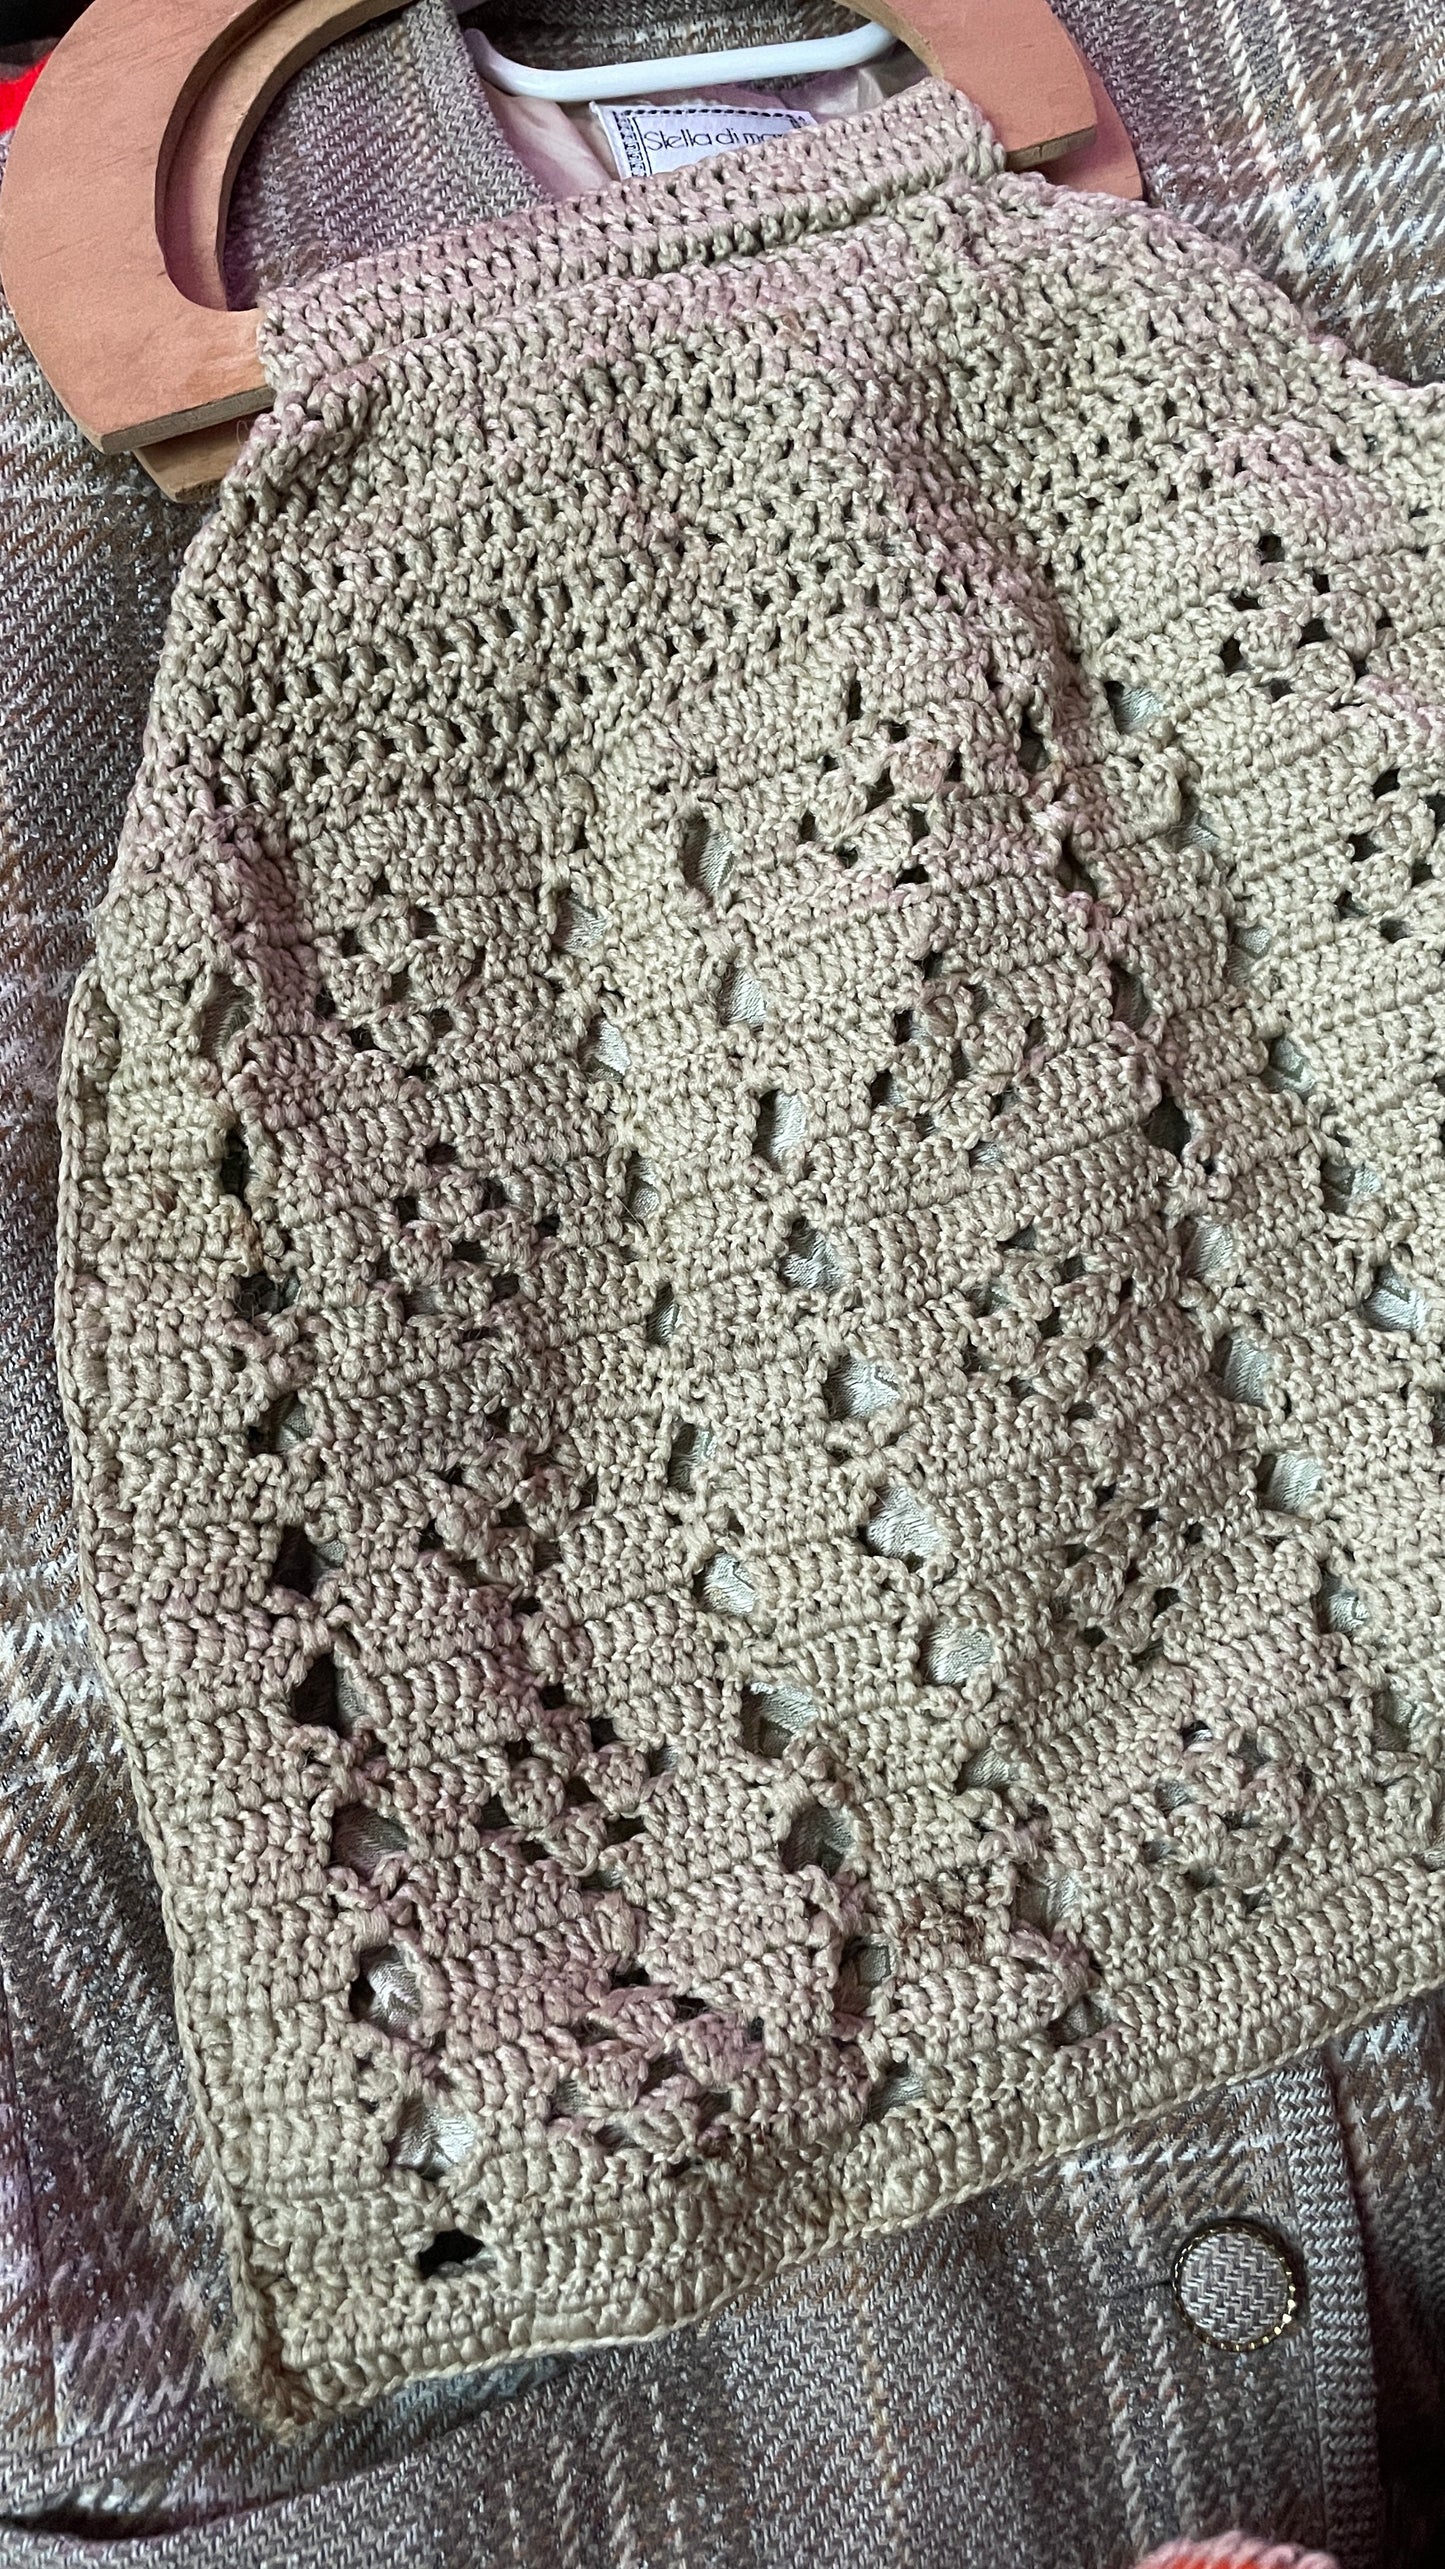 70s crochet purse